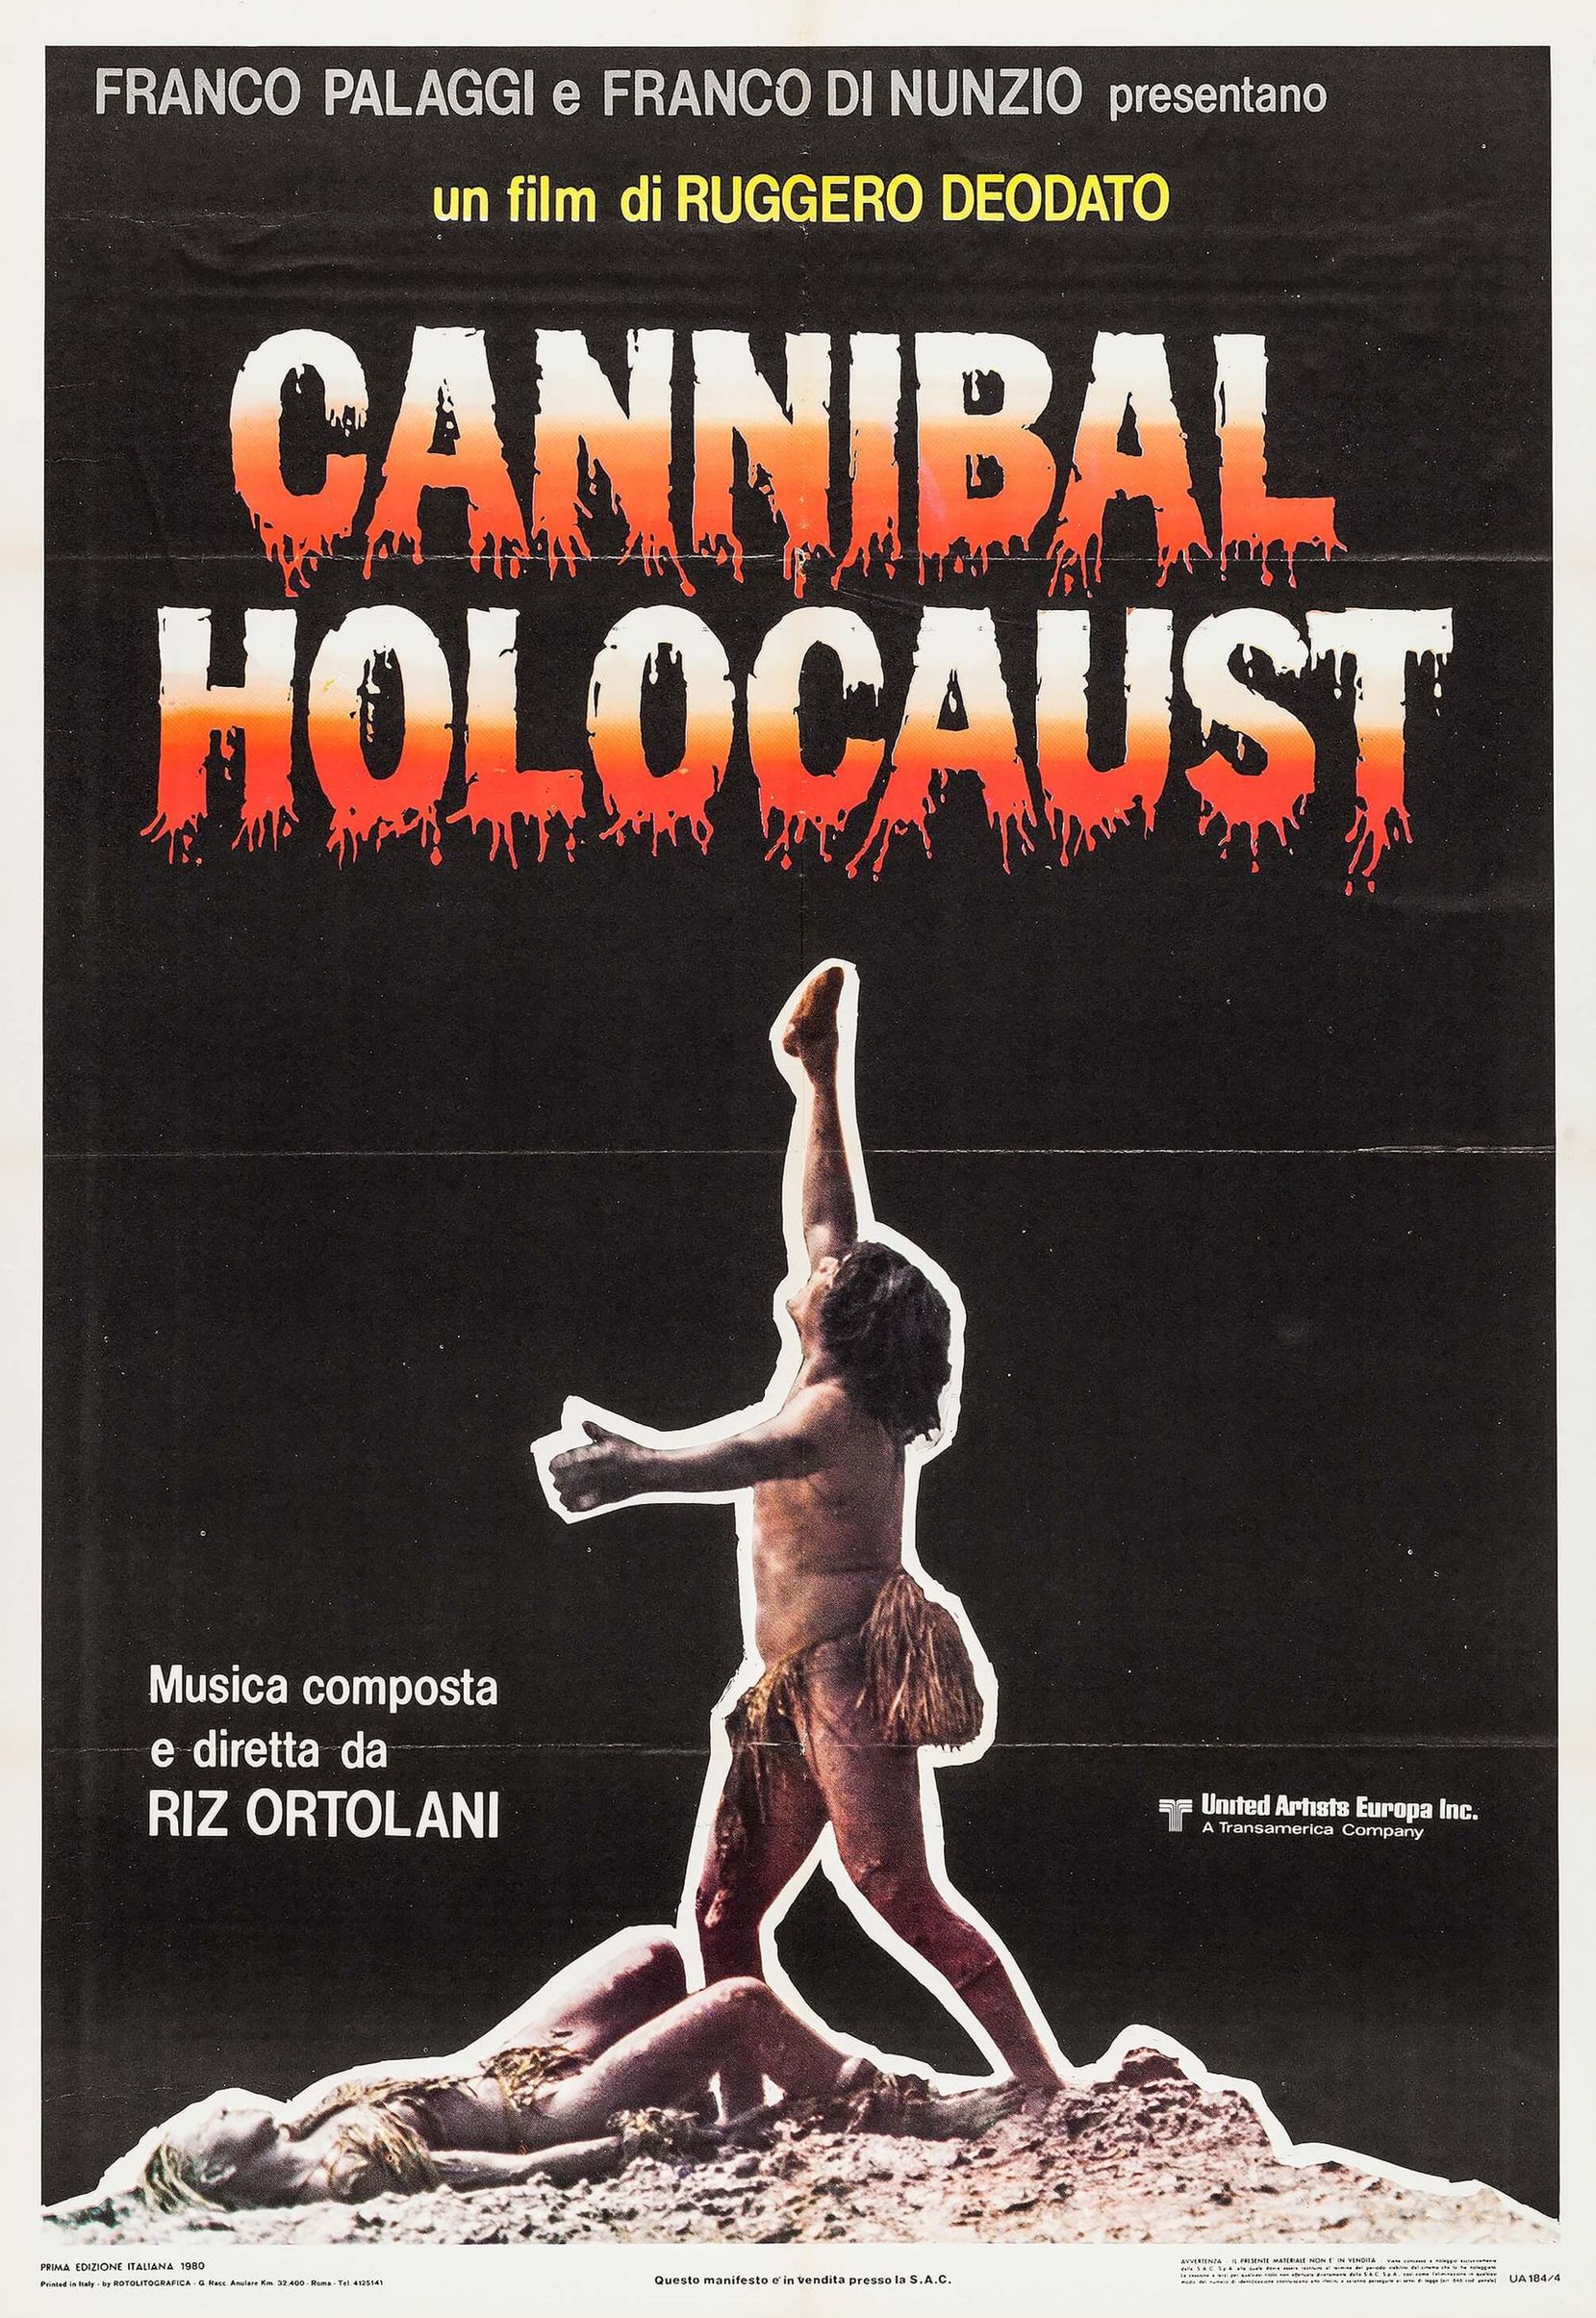 Ruggero Deodato, Cannibal Holocaust (1980), locandina del film